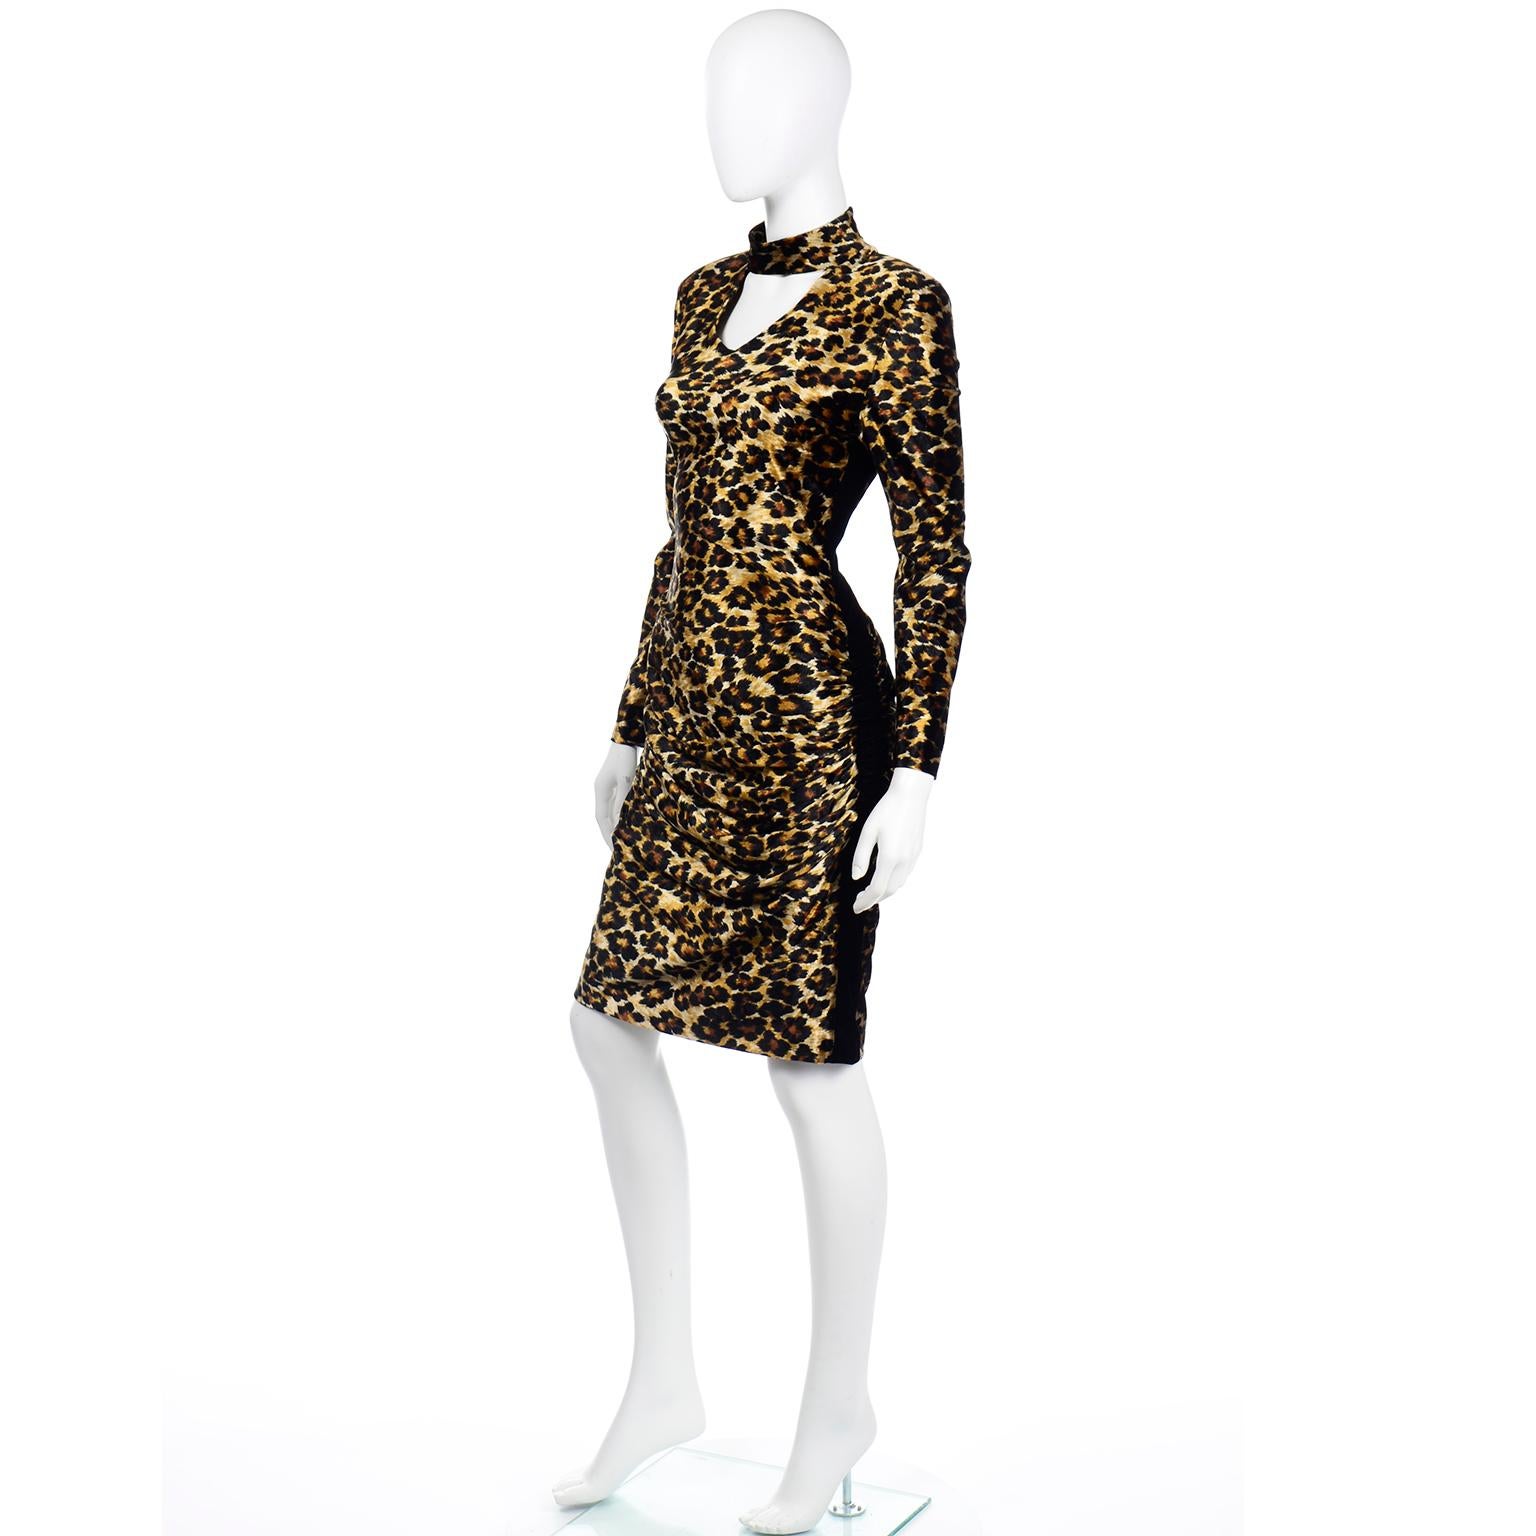 Fall Winter 1988/89 Patrick Kelly Vintage Leopard Print Bodycon Runway Dress For Sale 1